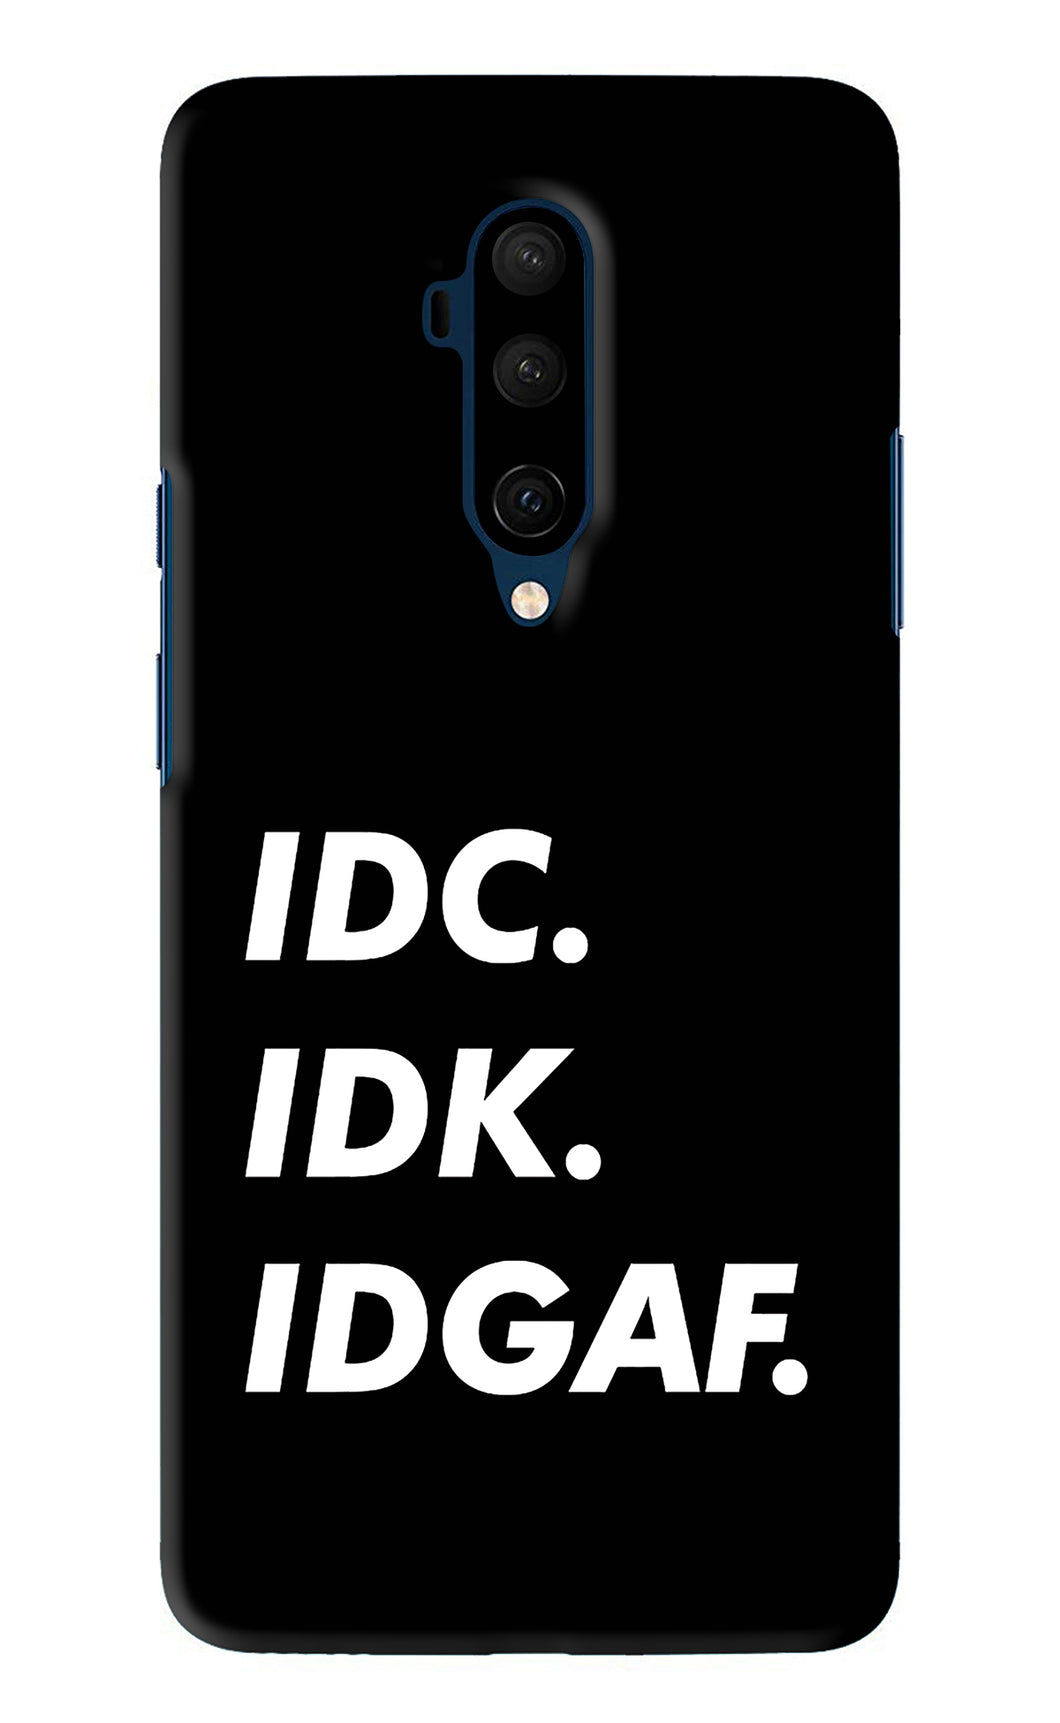 Idc Idk Idgaf OnePlus 7T Pro Back Skin Wrap